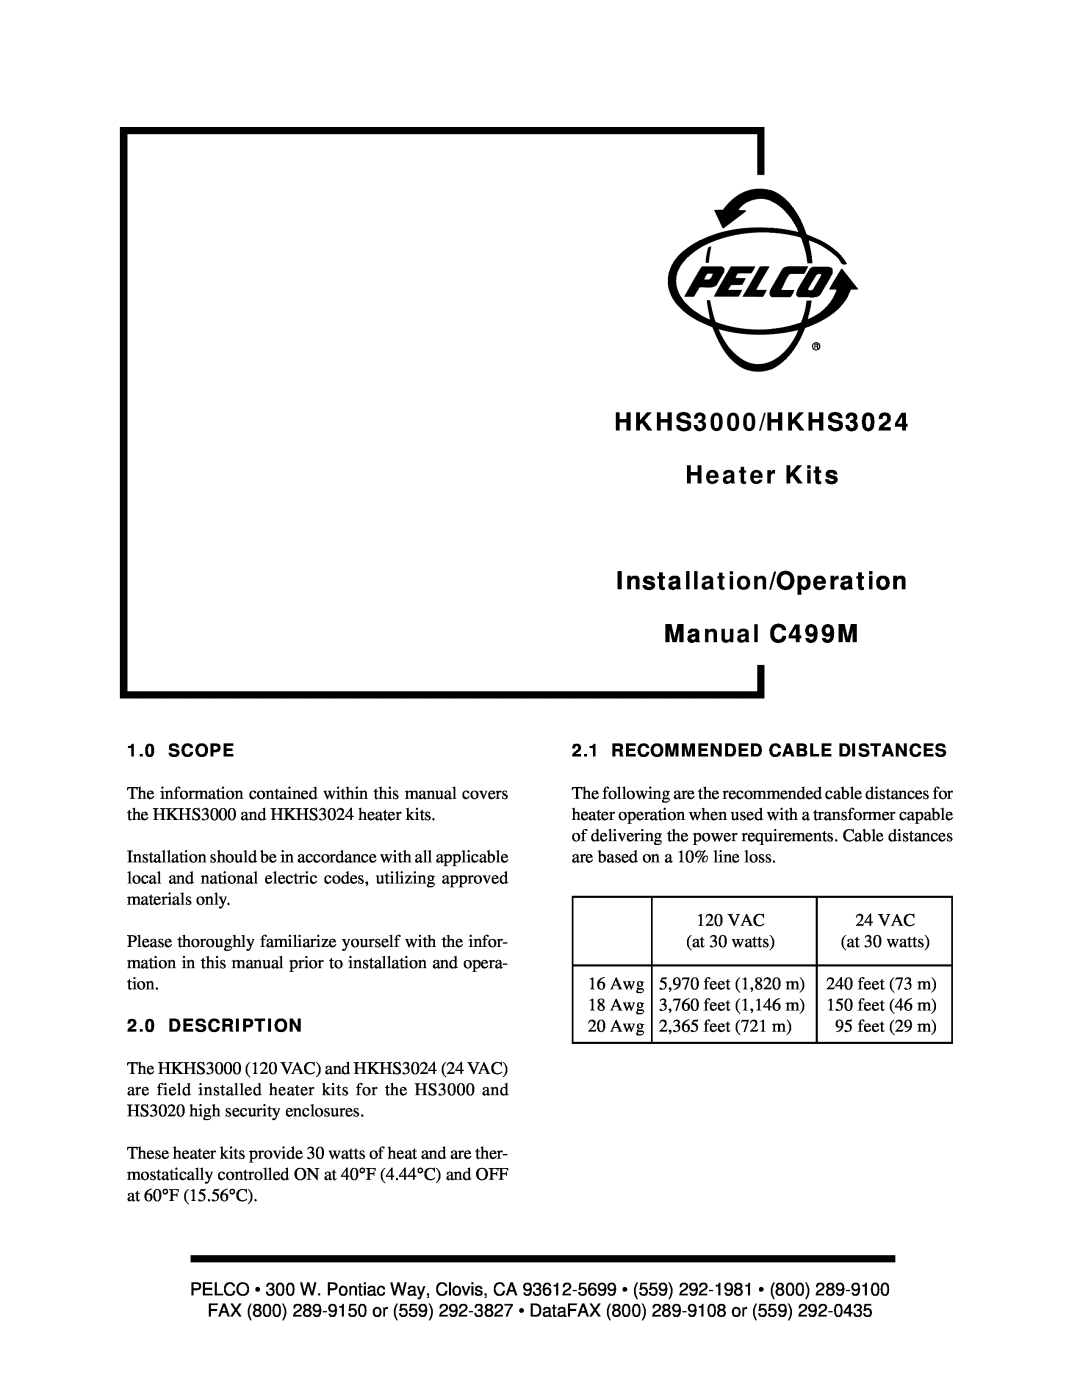 Pelco operation manual Scope, Description, Recommended Cable Distances, HKHS3000/HKHS3024, Heater Kits, Manual C499M 